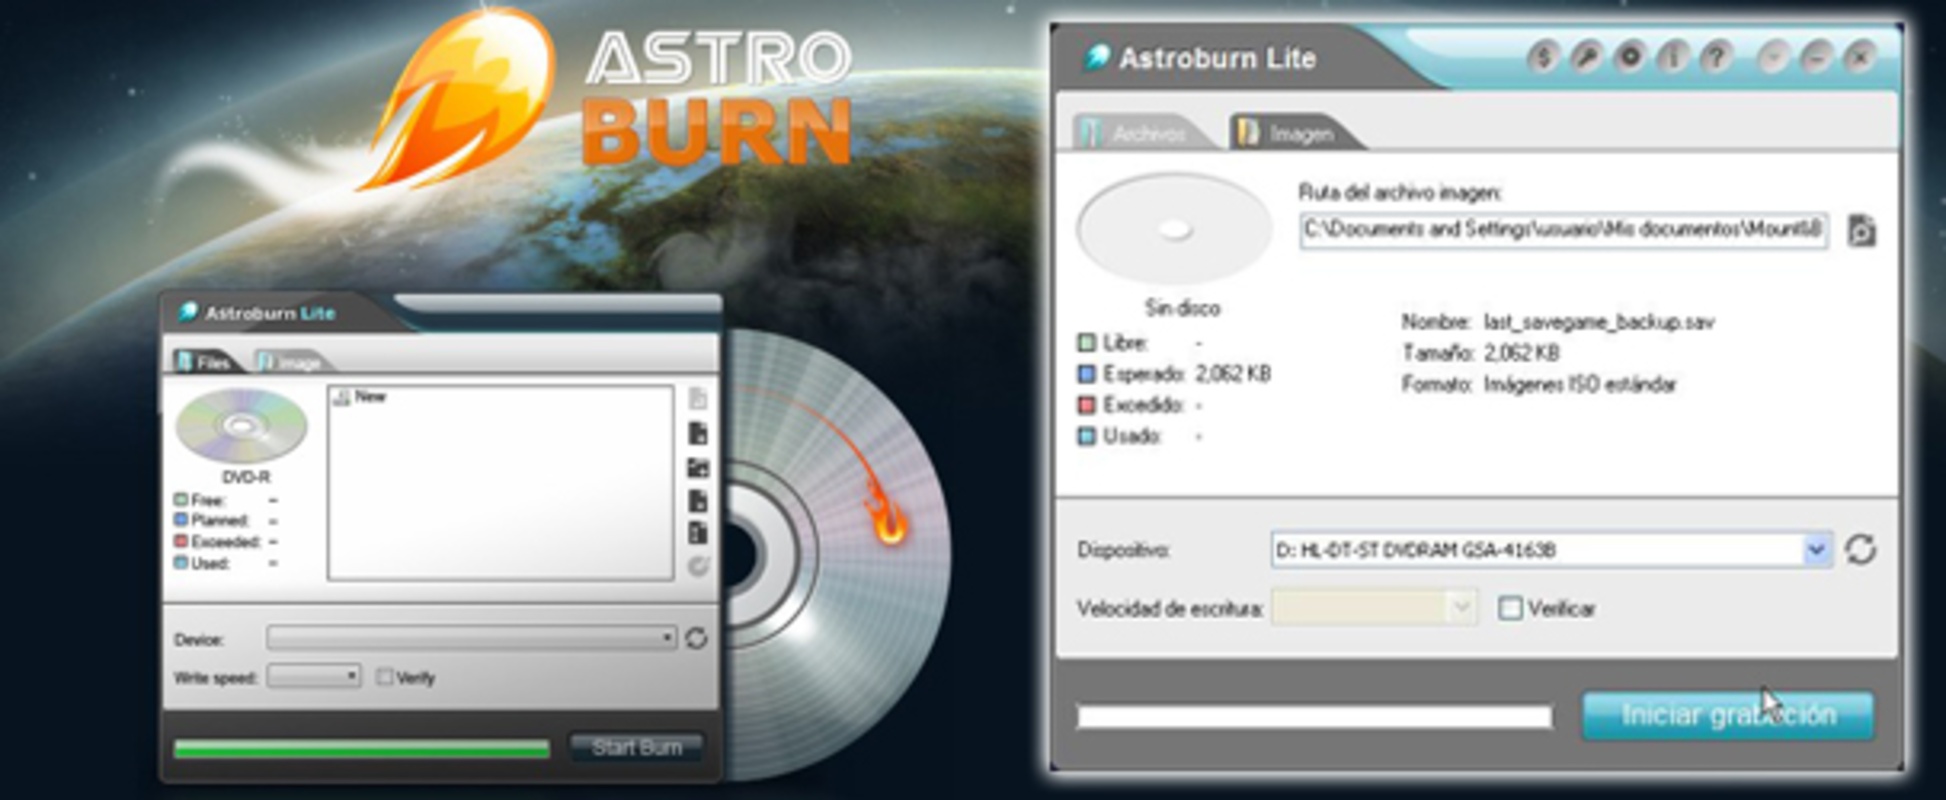 Astroburn Lite 2.0.0.205 for Windows Screenshot 1